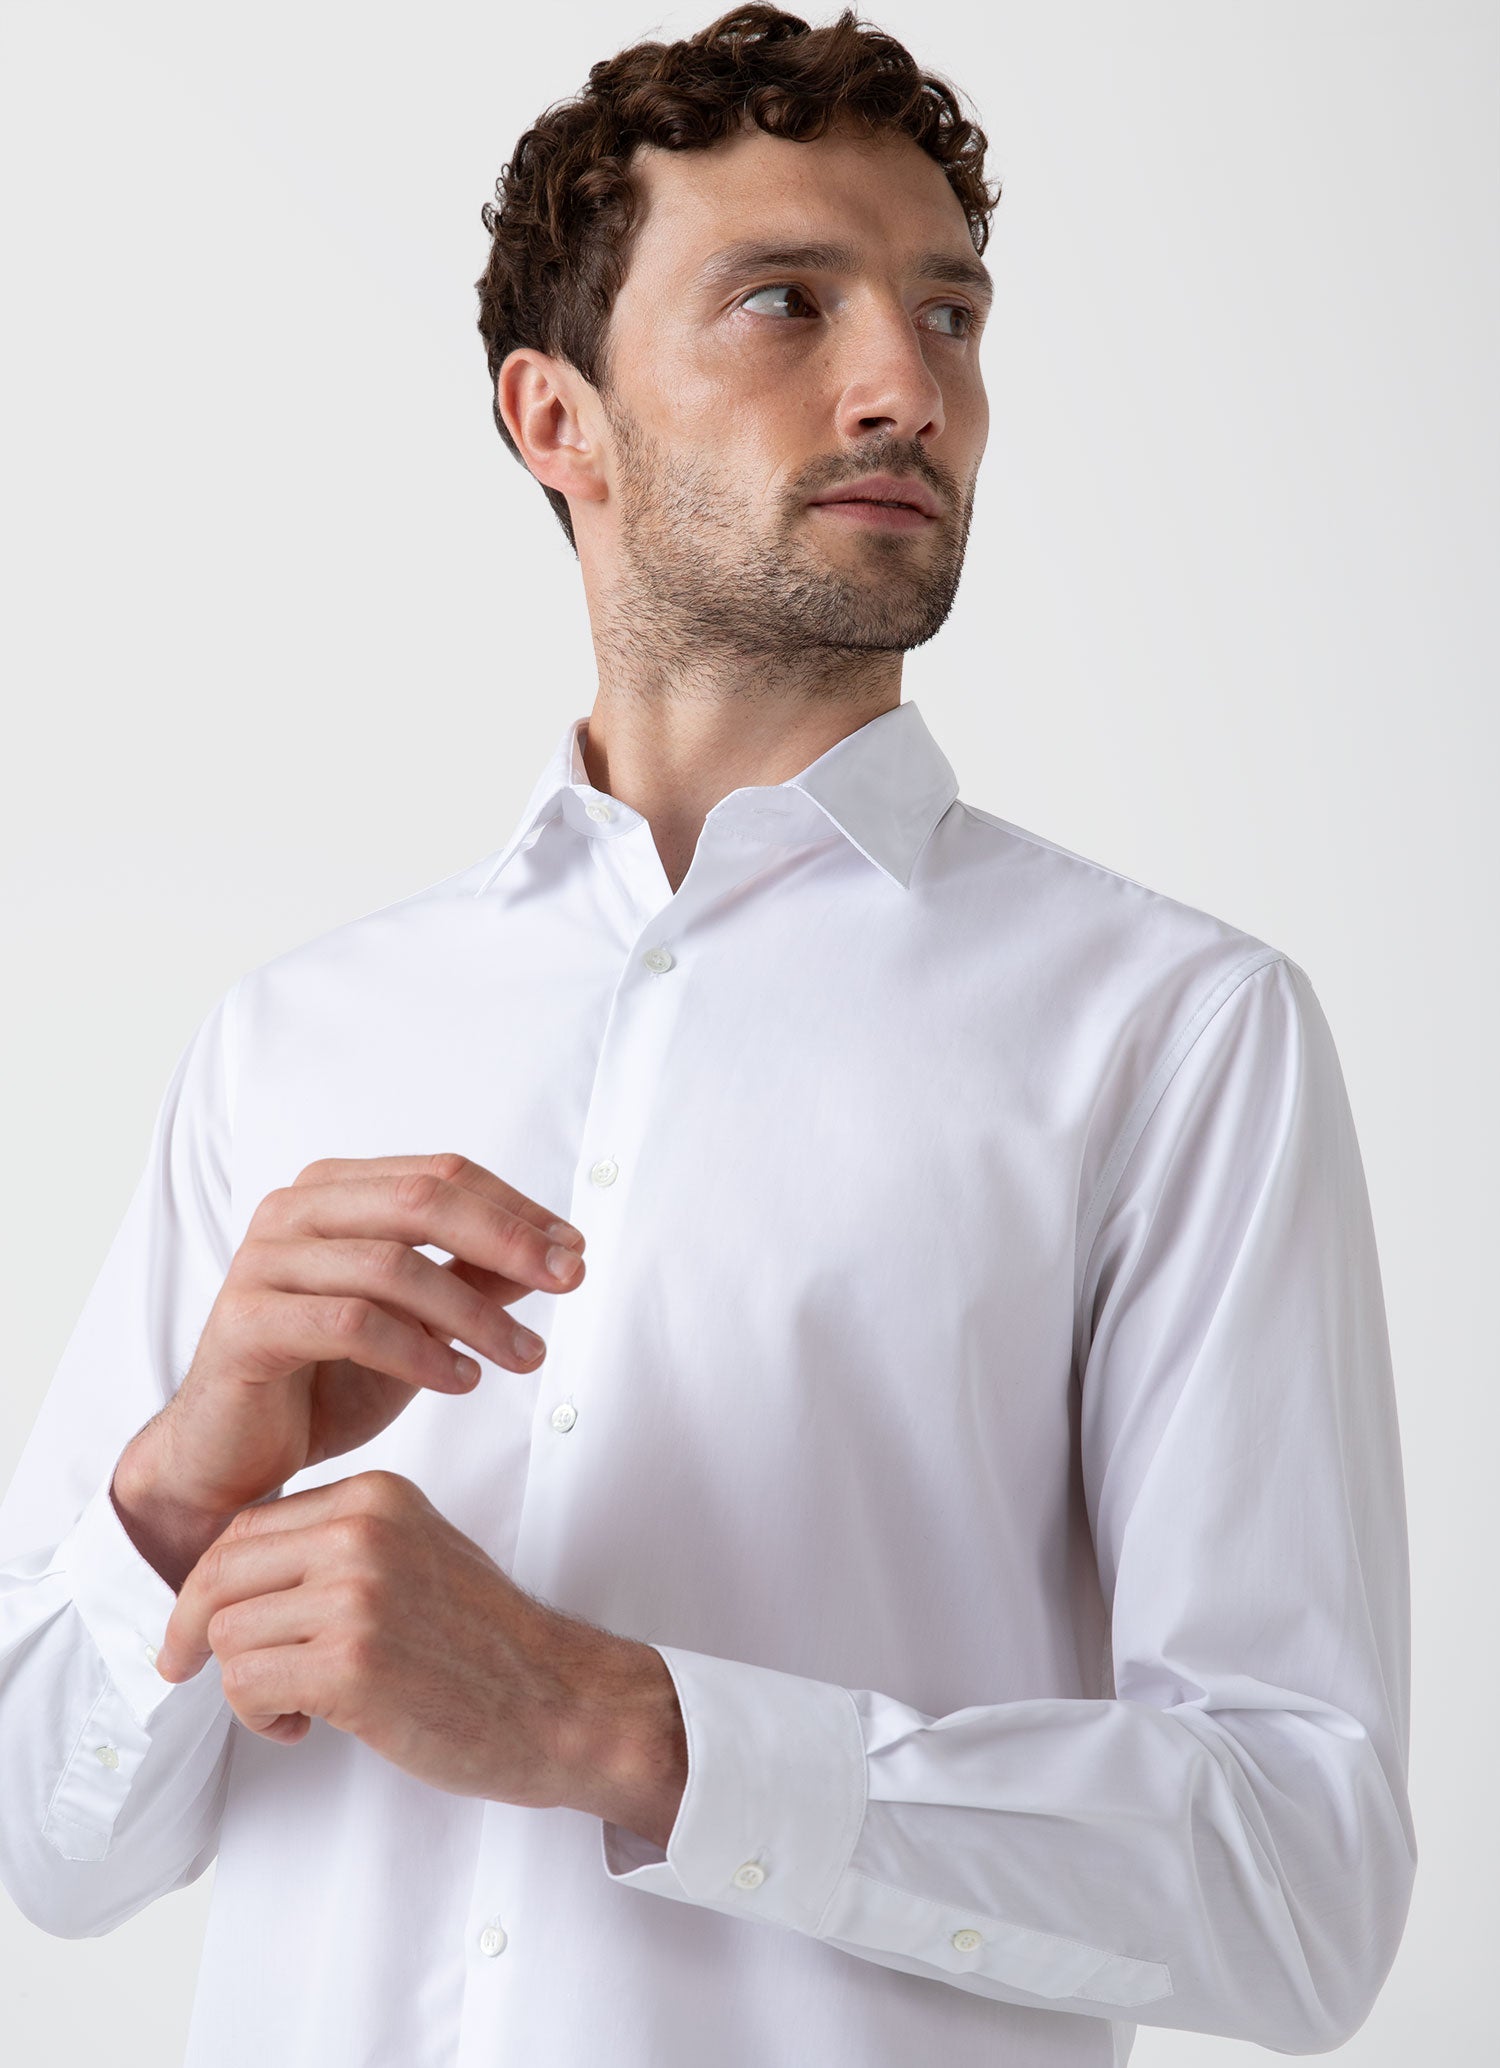 Men's Sea Island Cotton Shirt in White | Sunspel